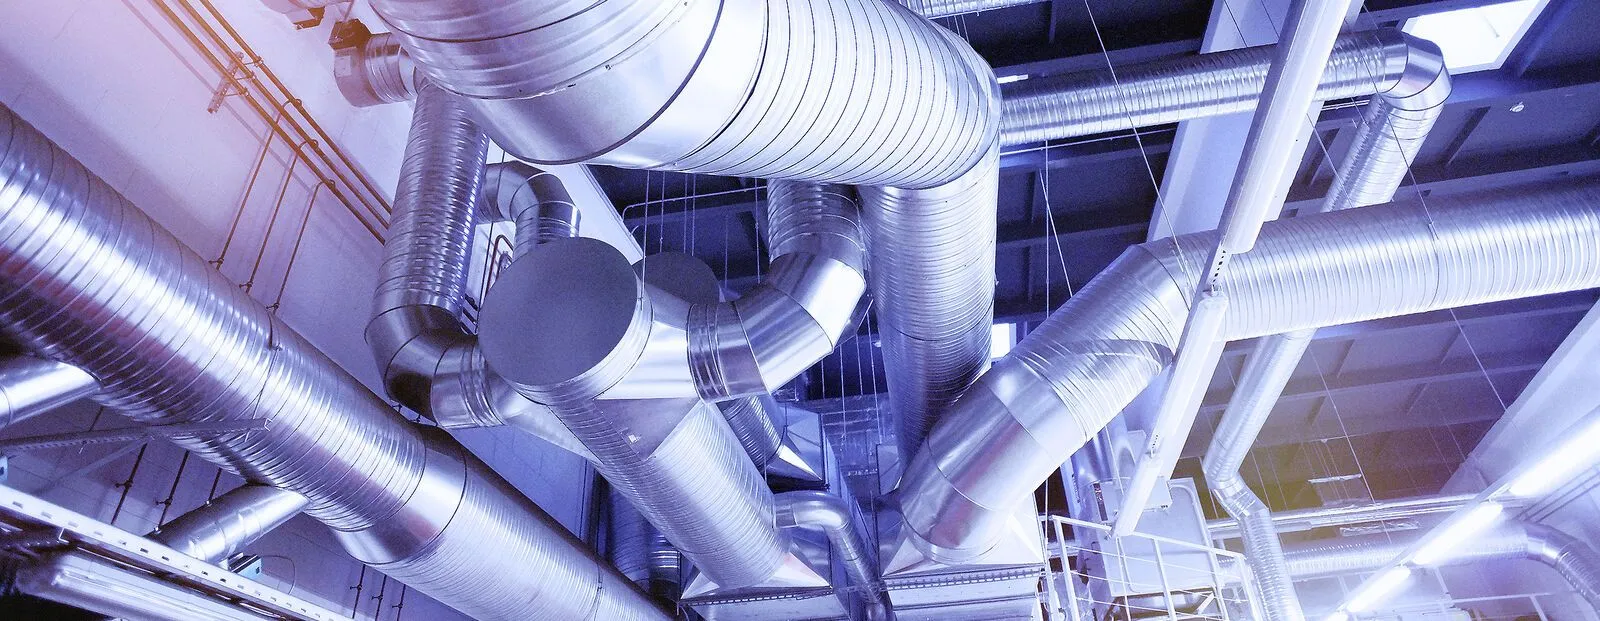 adobe 336336378 - System of industrial ventilating pipes.jpg